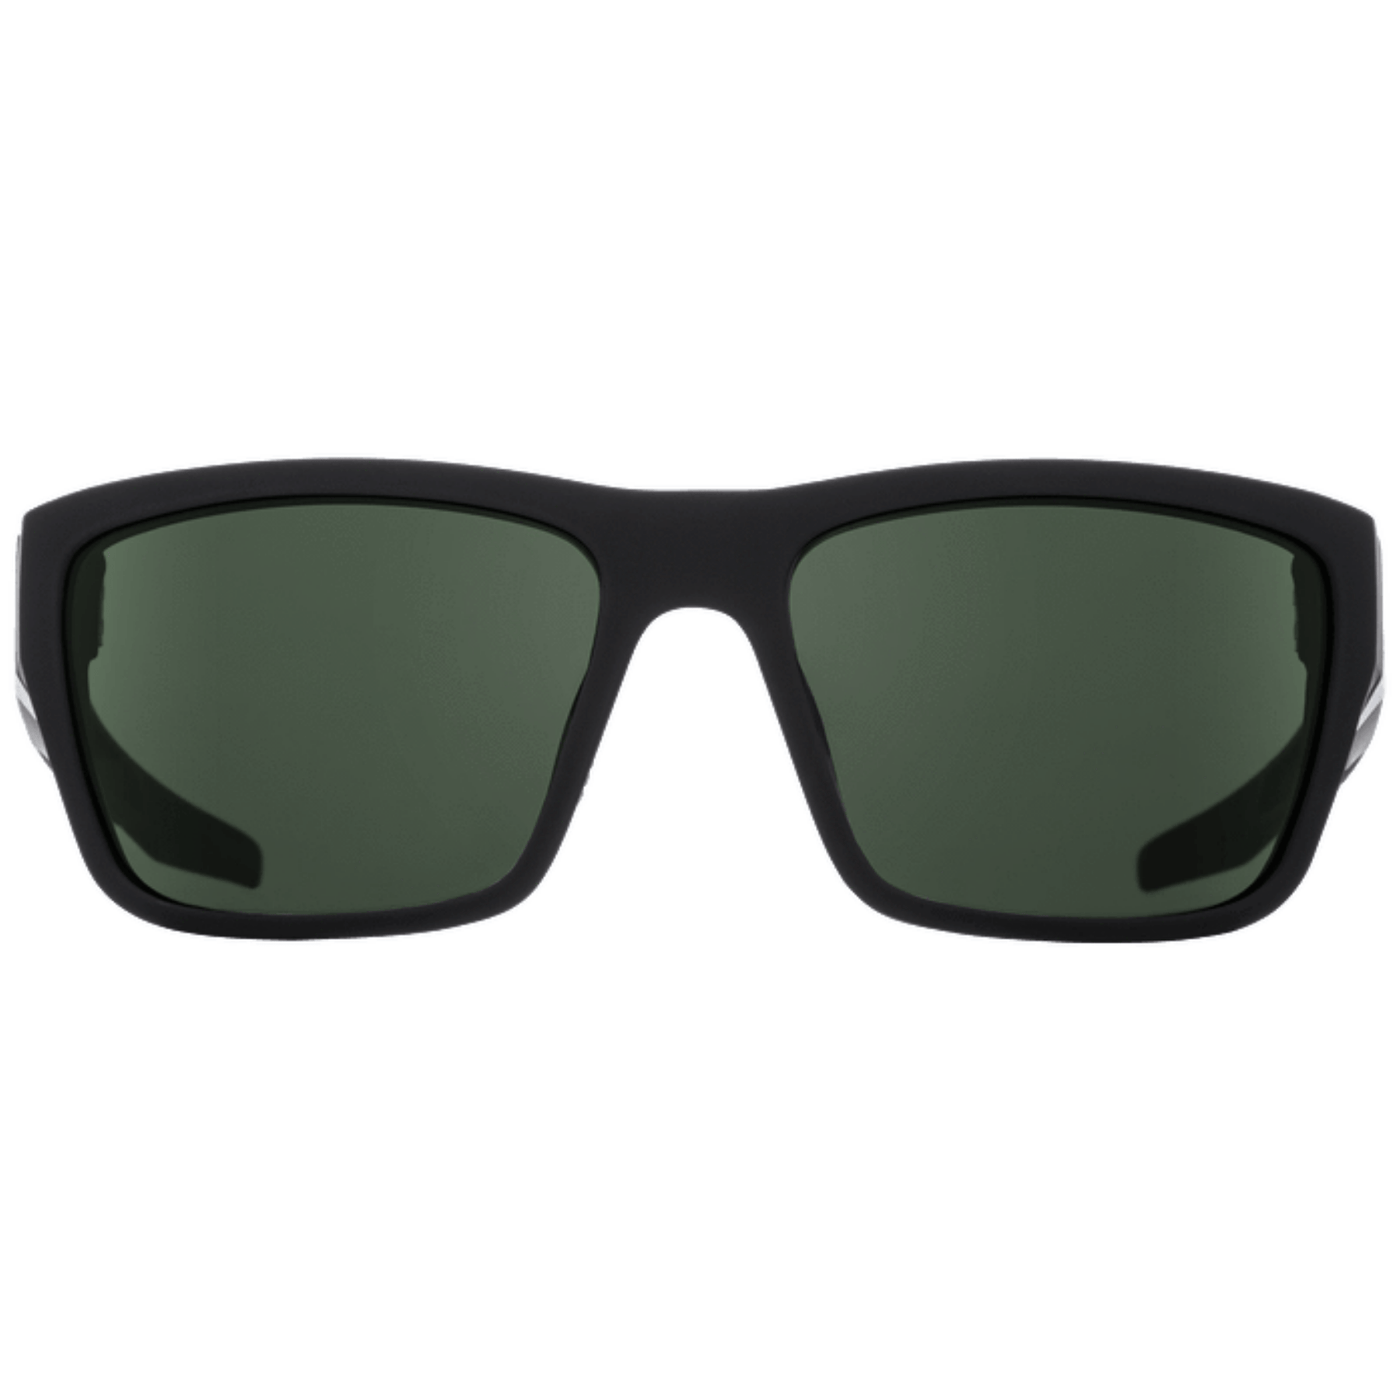 SPY DIRTY MO 2 Polarized Sunglasses, Happy Lens - Gray/Green 8Lines Shop - Fast Shipping